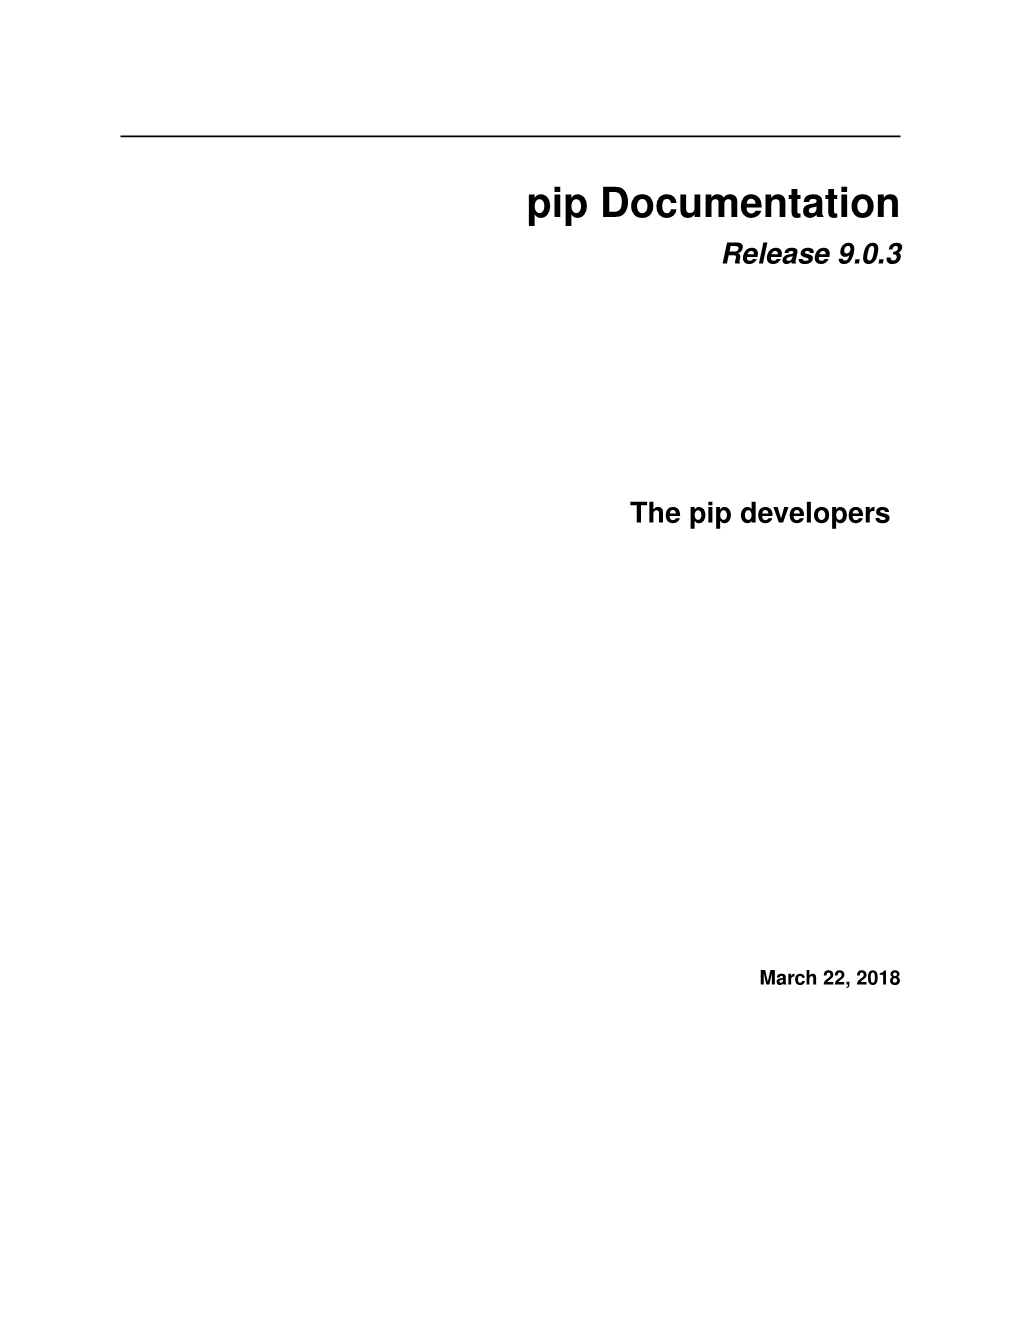 Pip Documentation Release 9.0.3